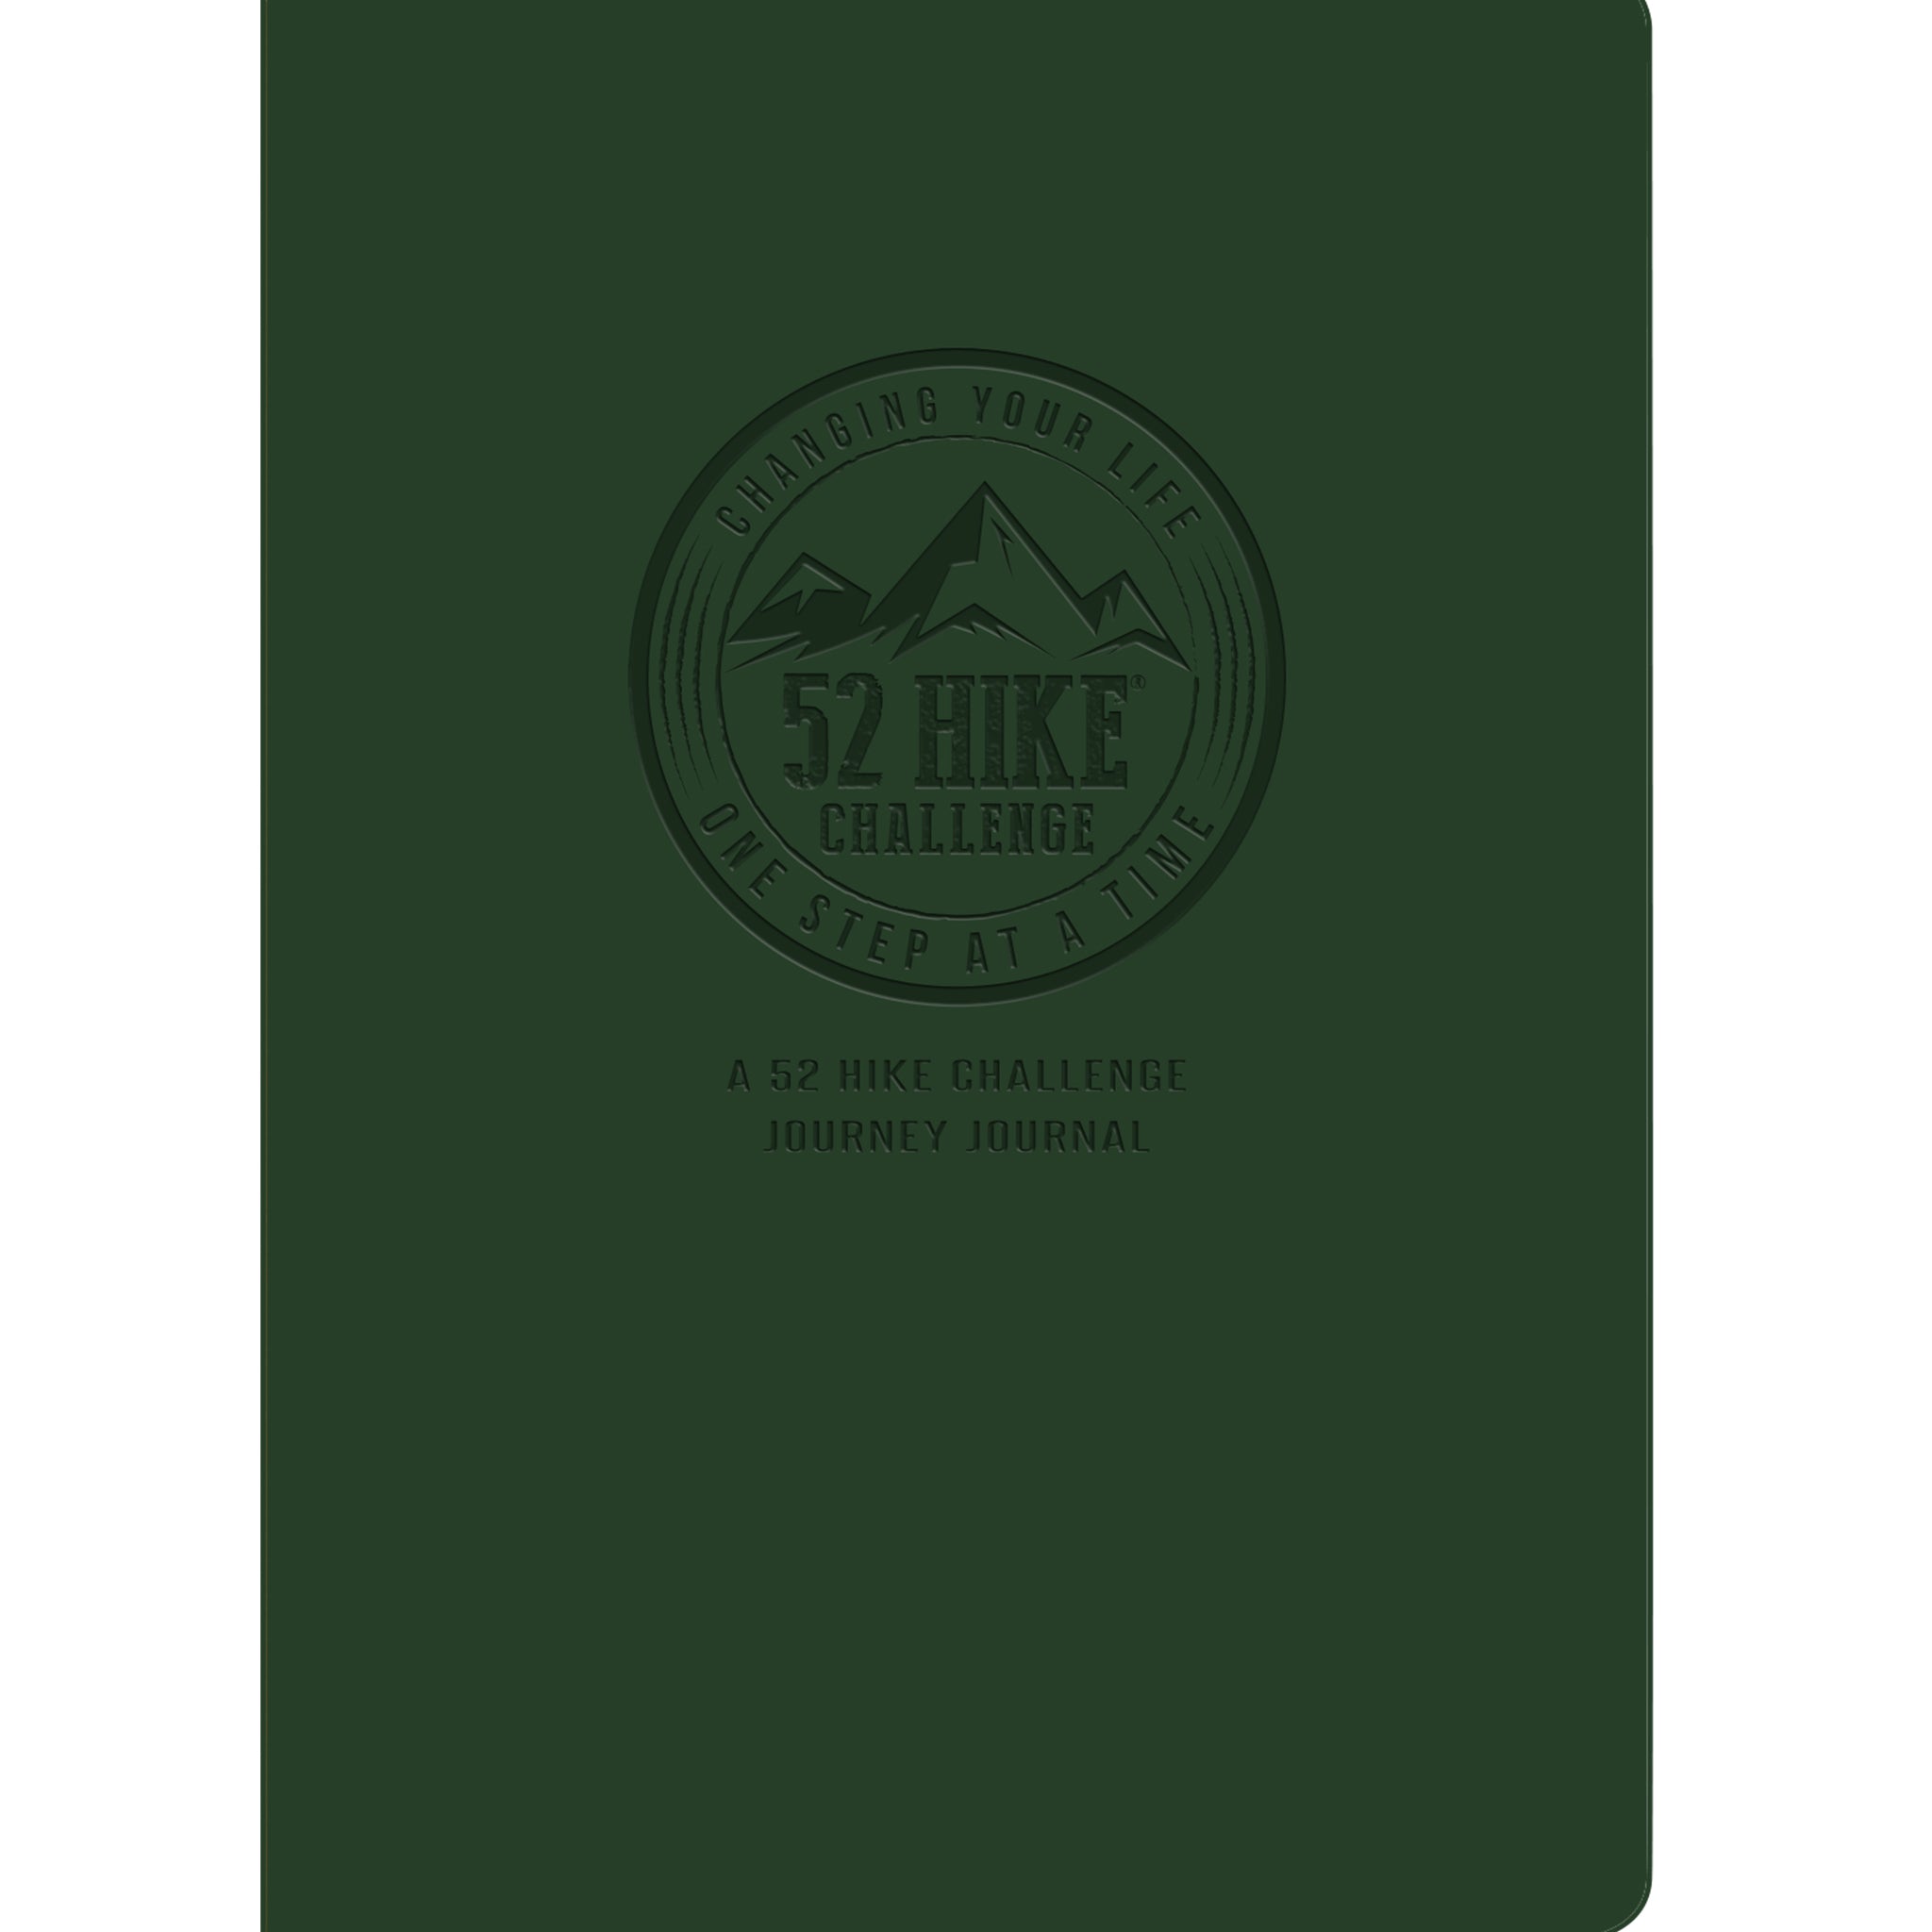 52 Hike Challenge Journey Journal